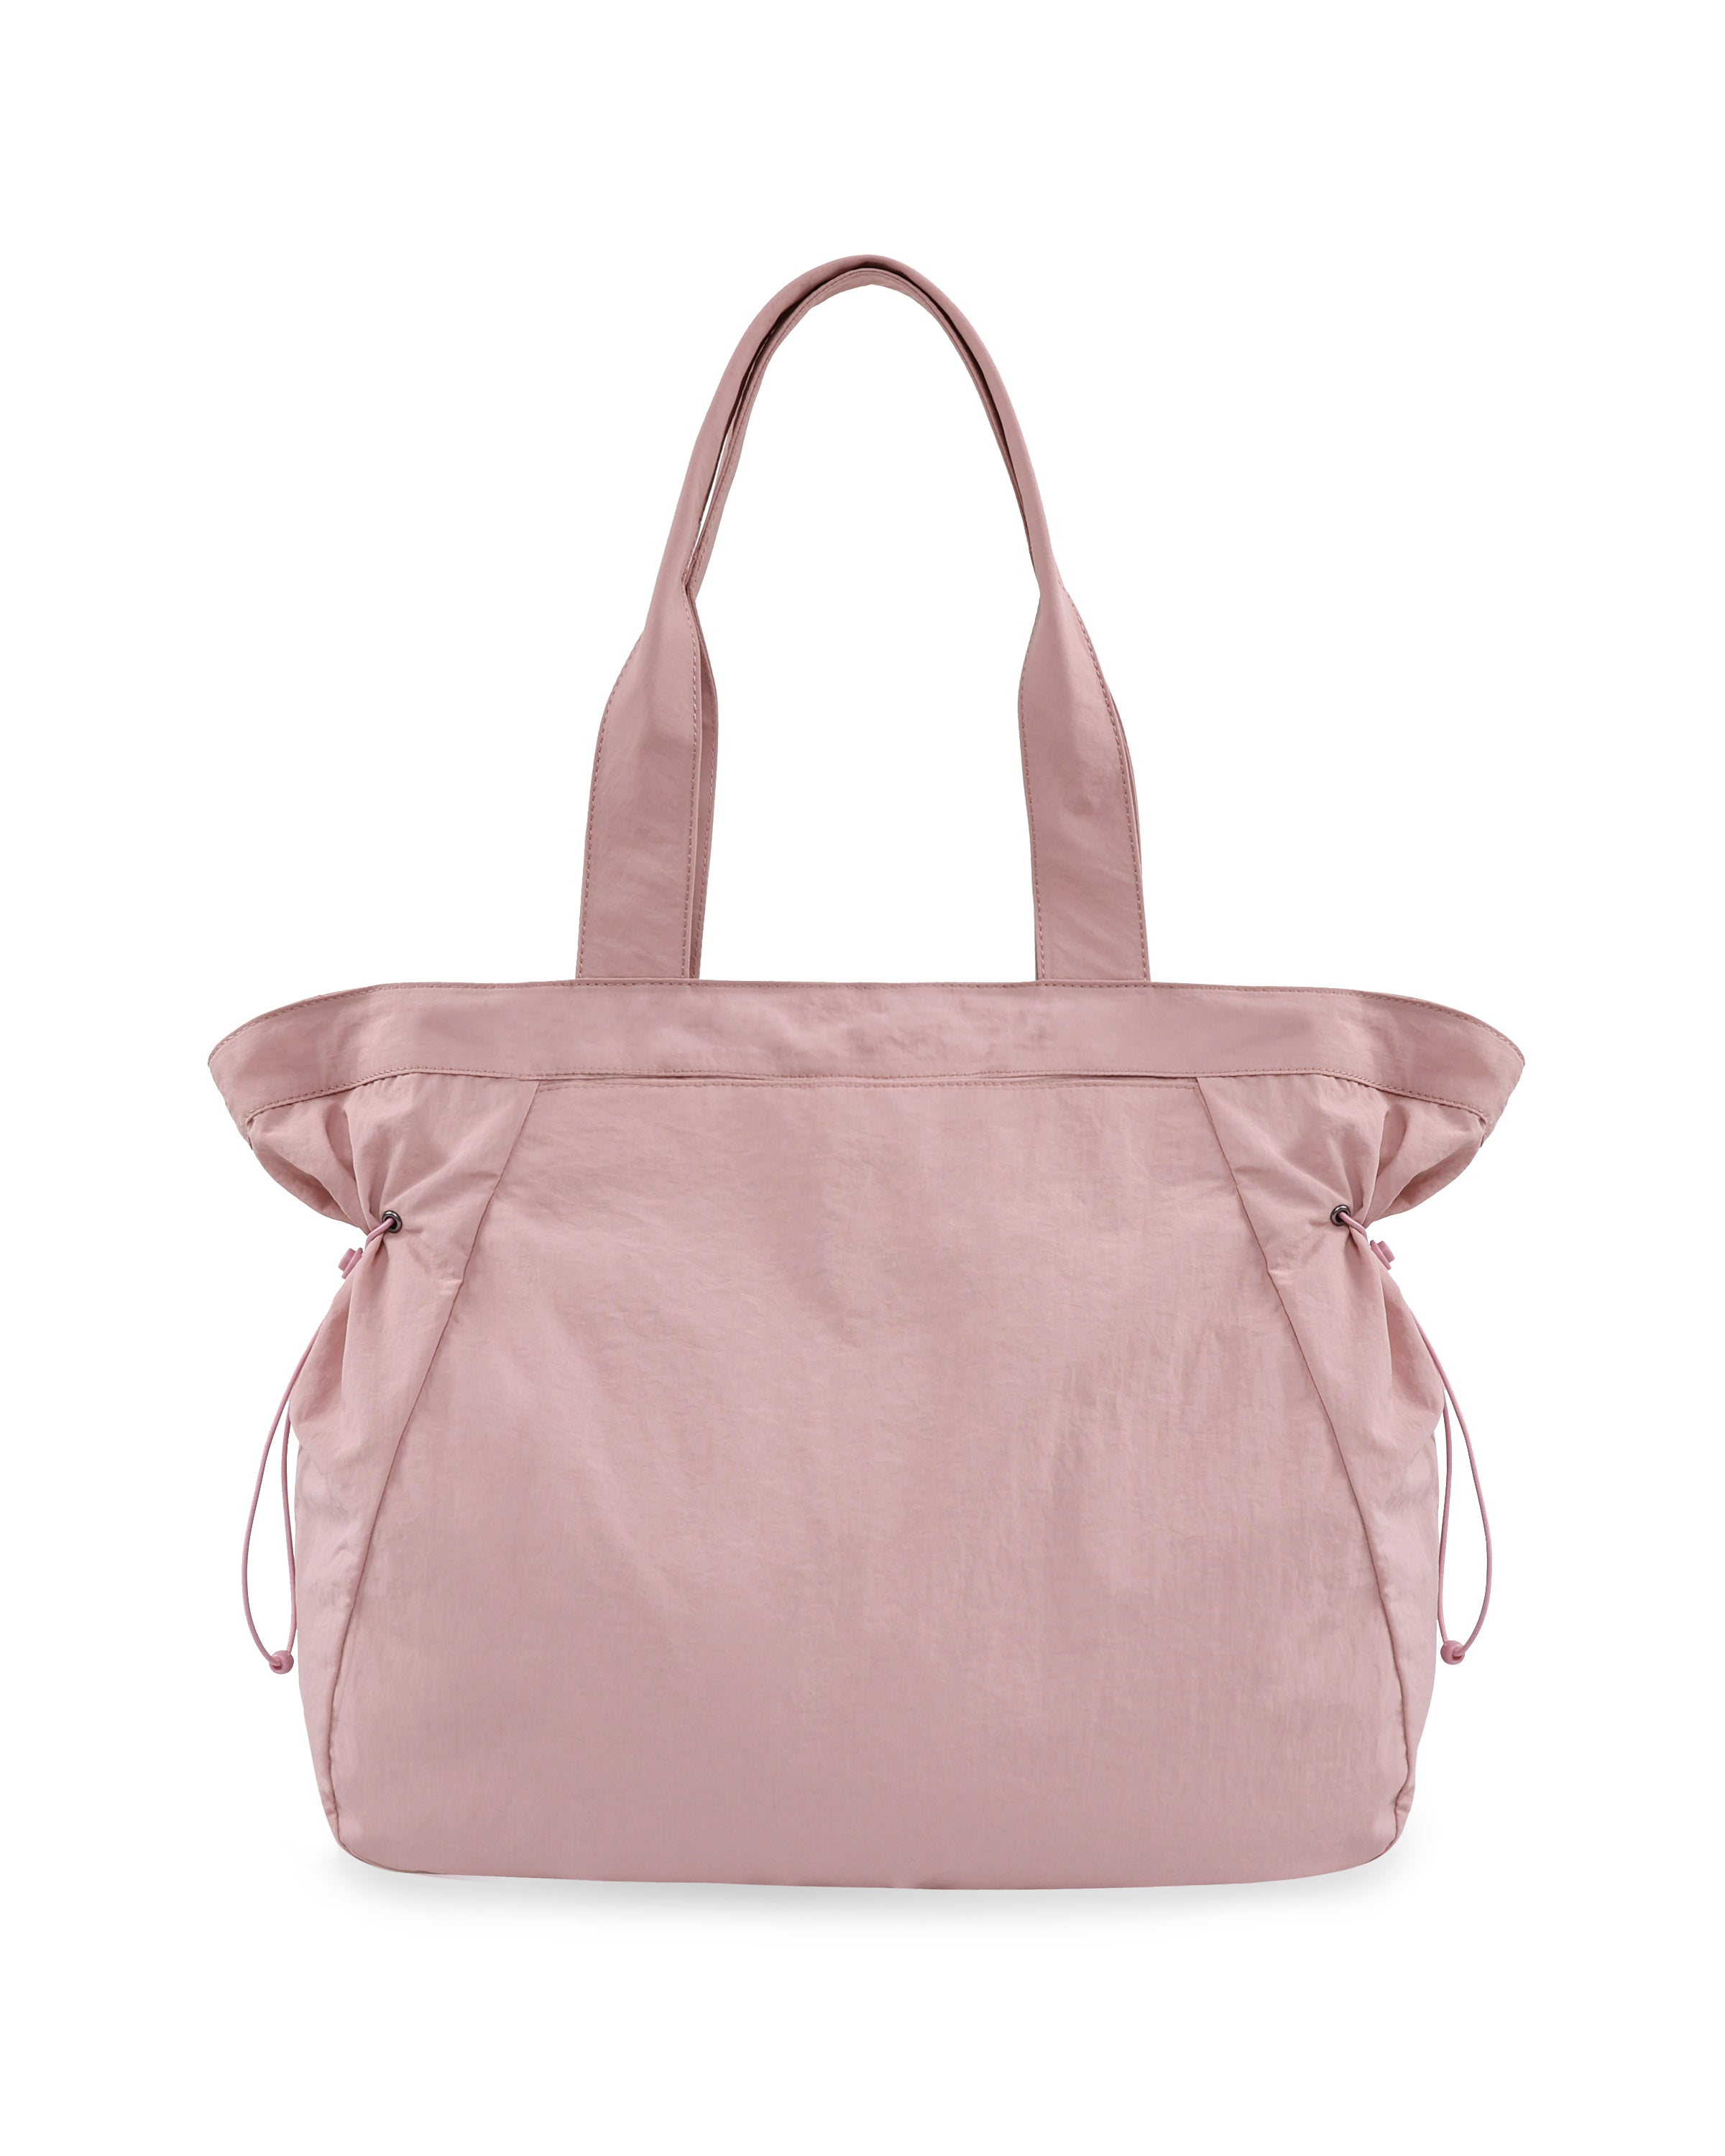 18L Side-Cinch Shopper Tote Bags Blush Pink 14" x 16" x 4.5" - ododos